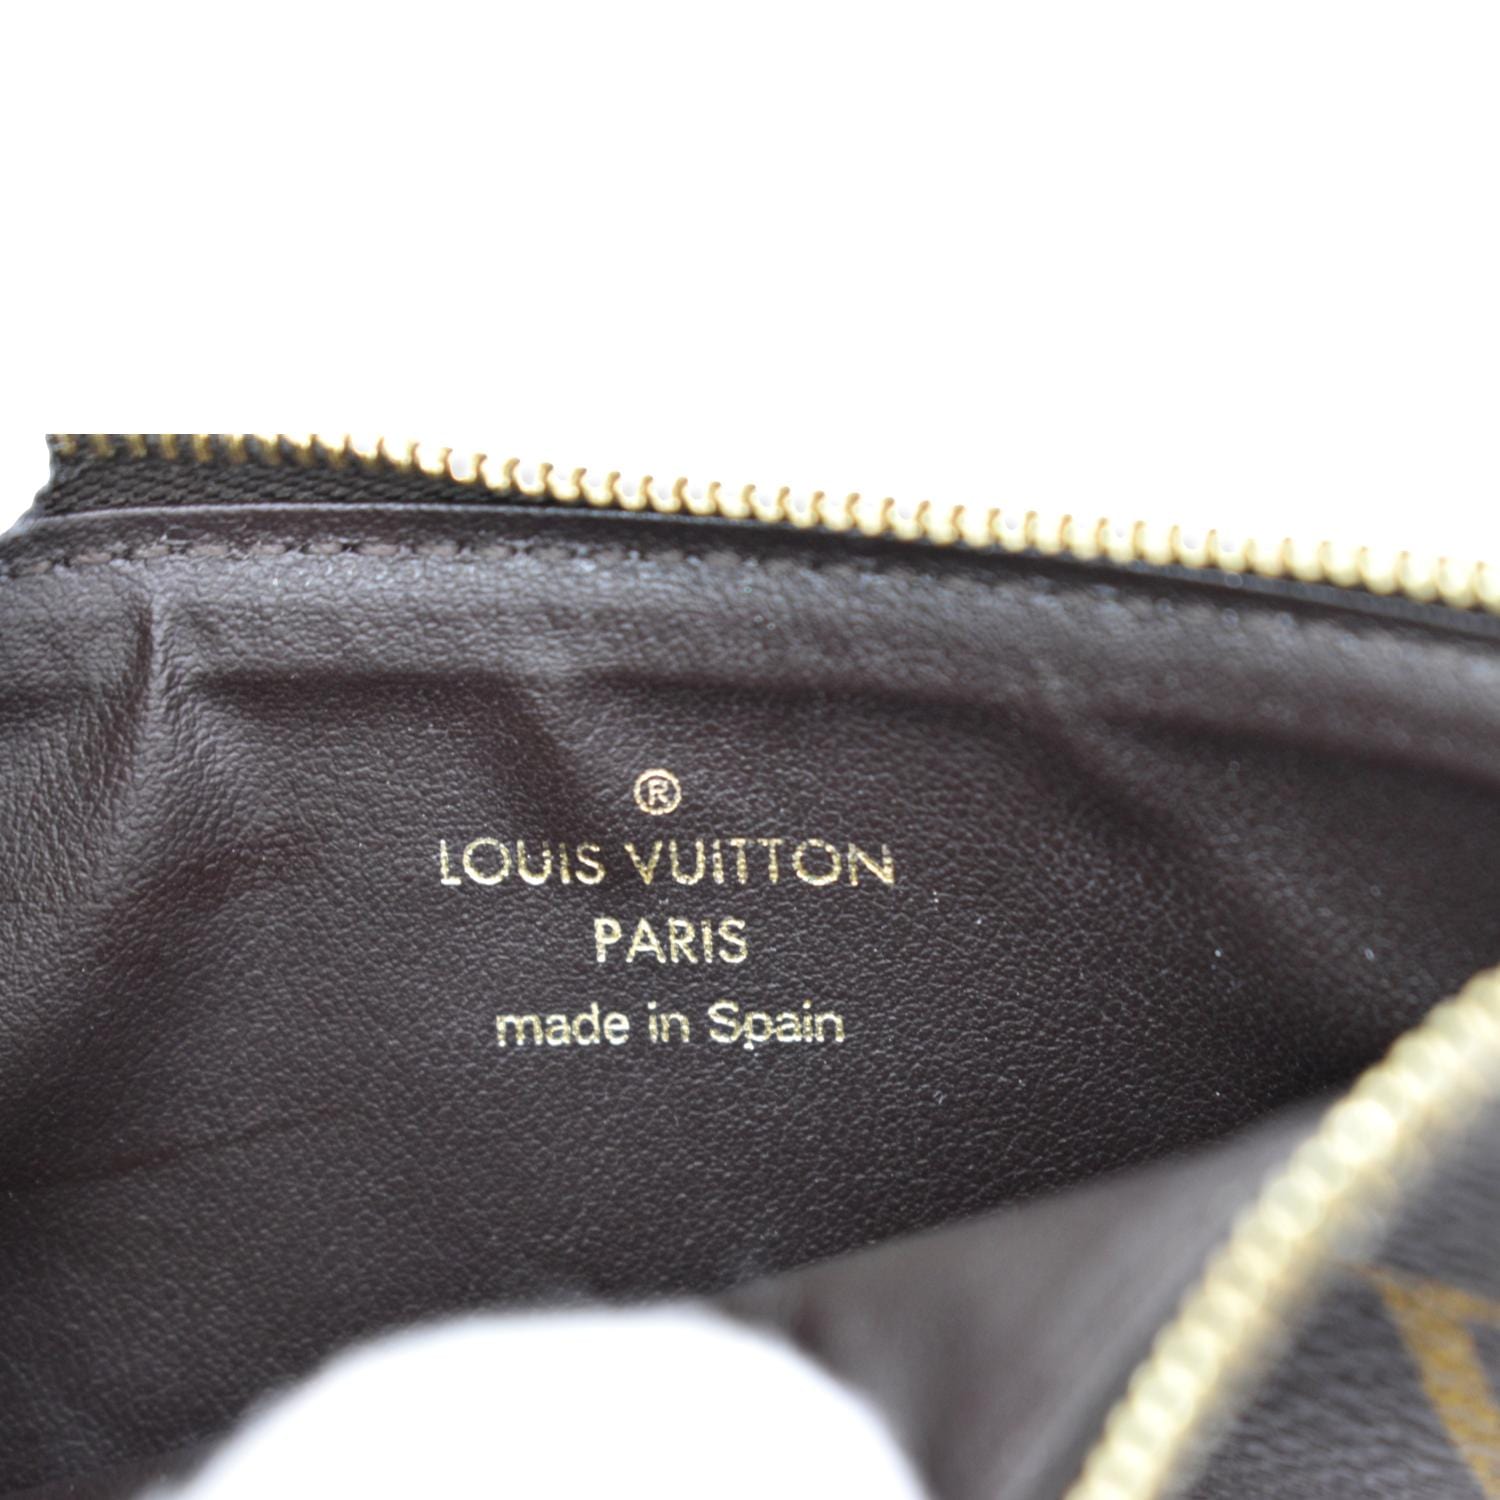 SOLD!!! ♥️❤️ Louis Vuitton Priscilla certified